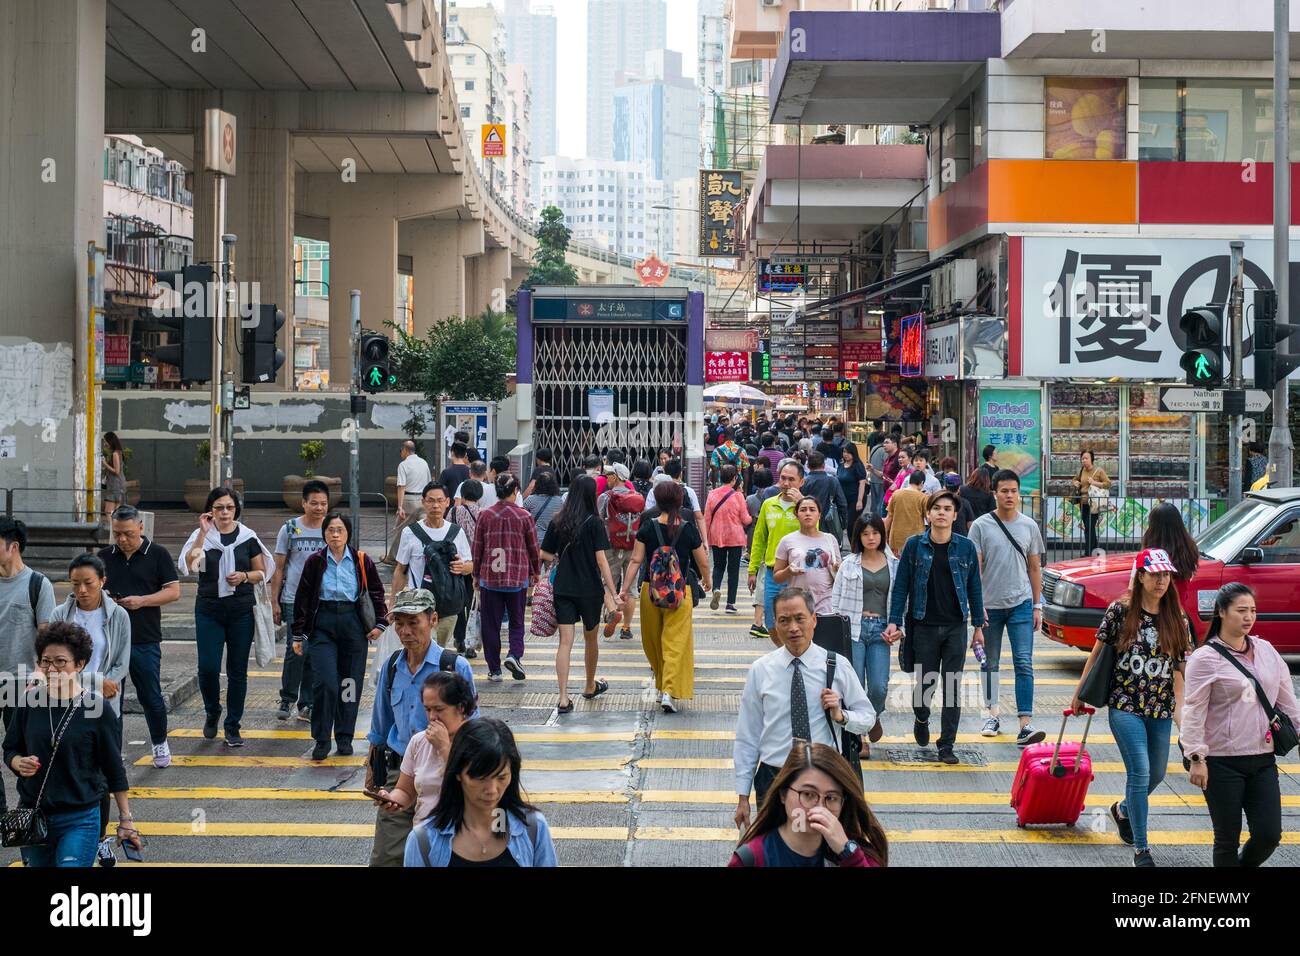 Hong Kong - November, 2019: Crowd of walking people crossing street in Hong Kong Stock Photo